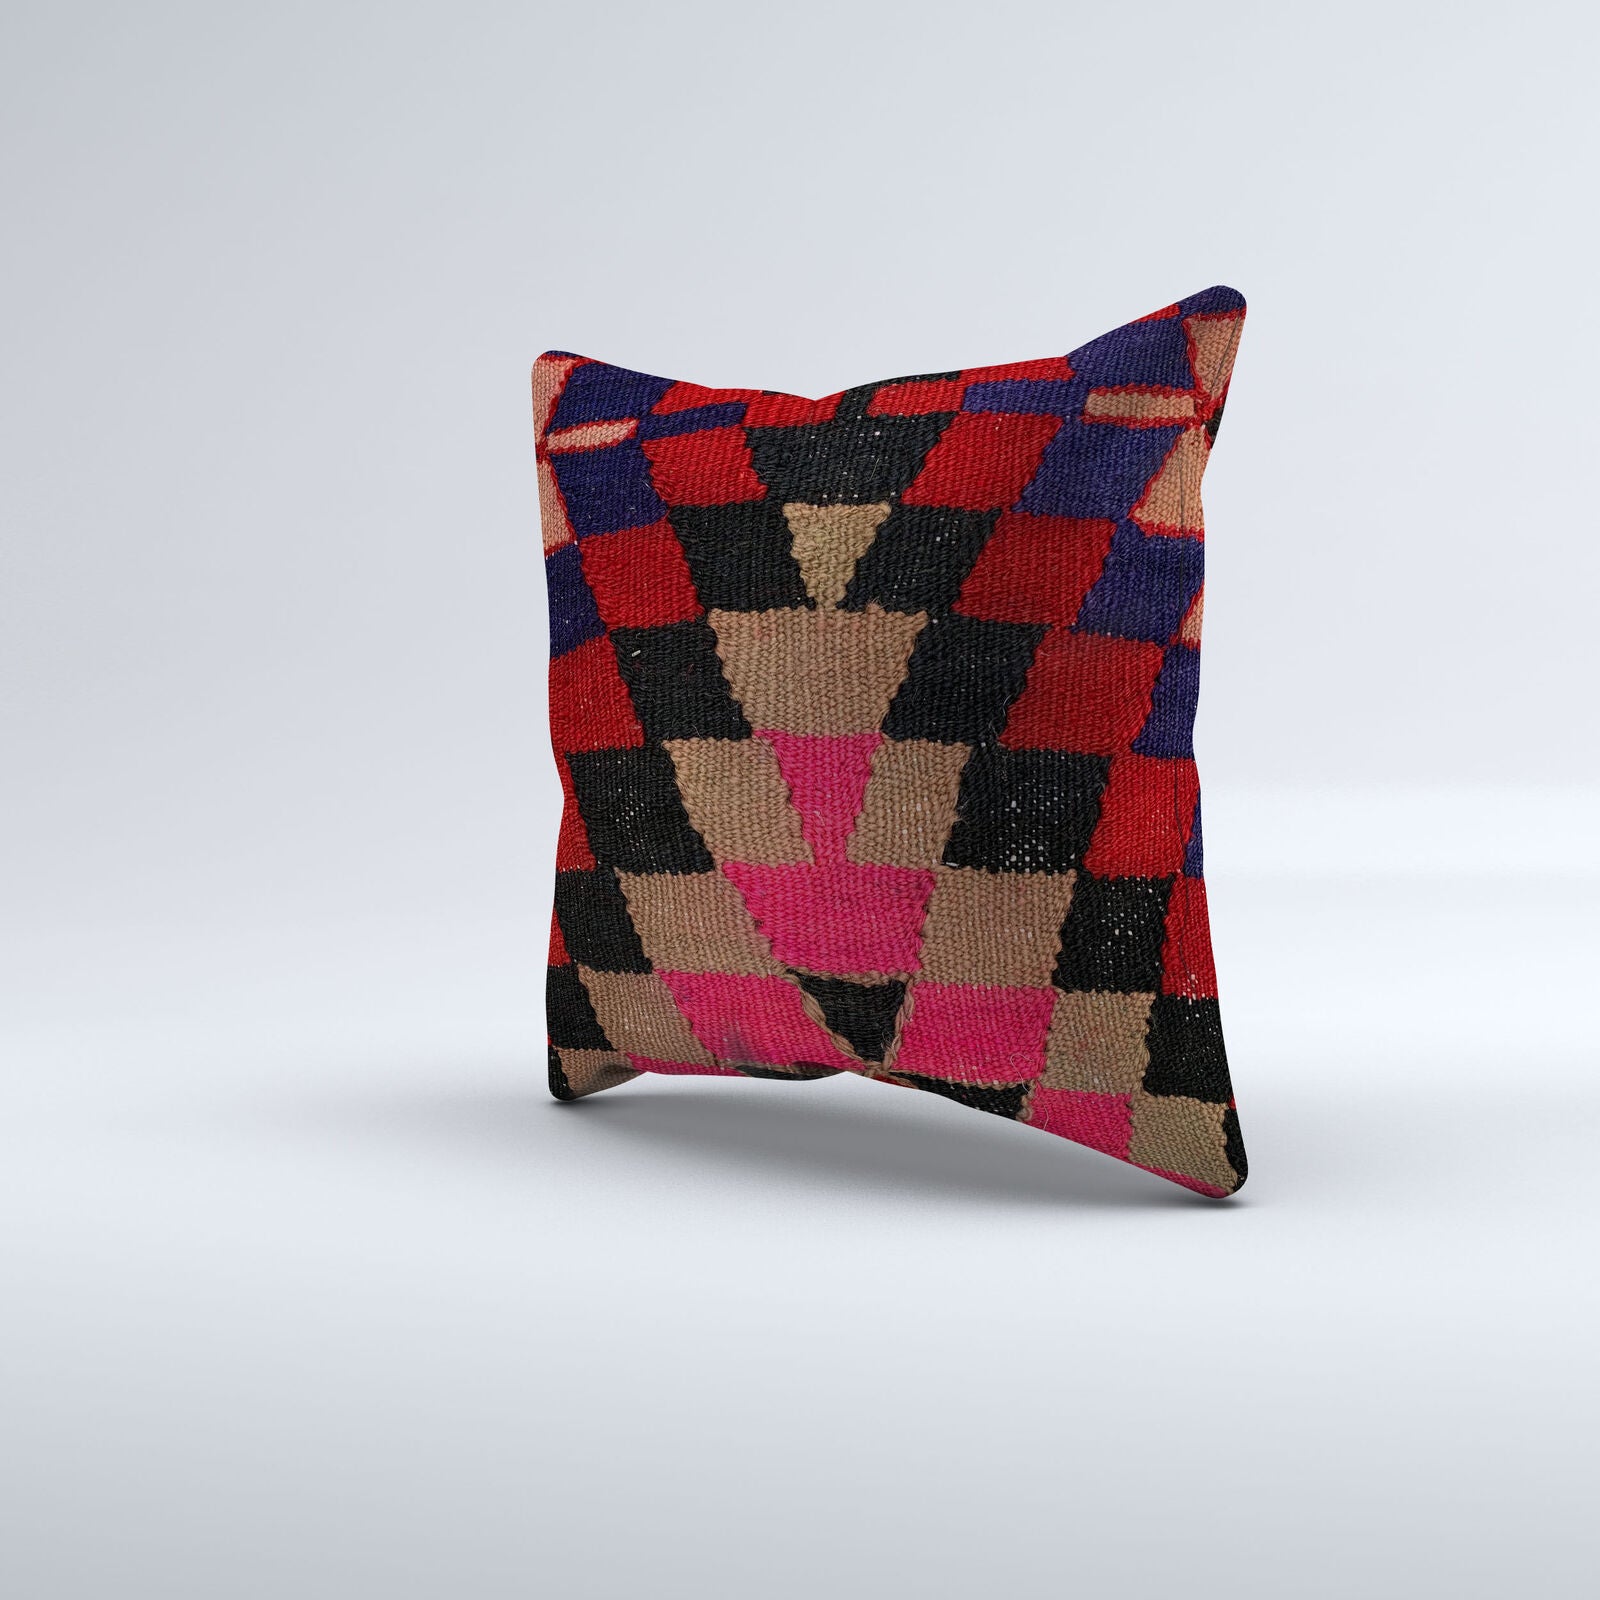 Vintage Turkish Kilim Cushion Cover 40x40 cm 16x16 in  Square Pillowcase 40960